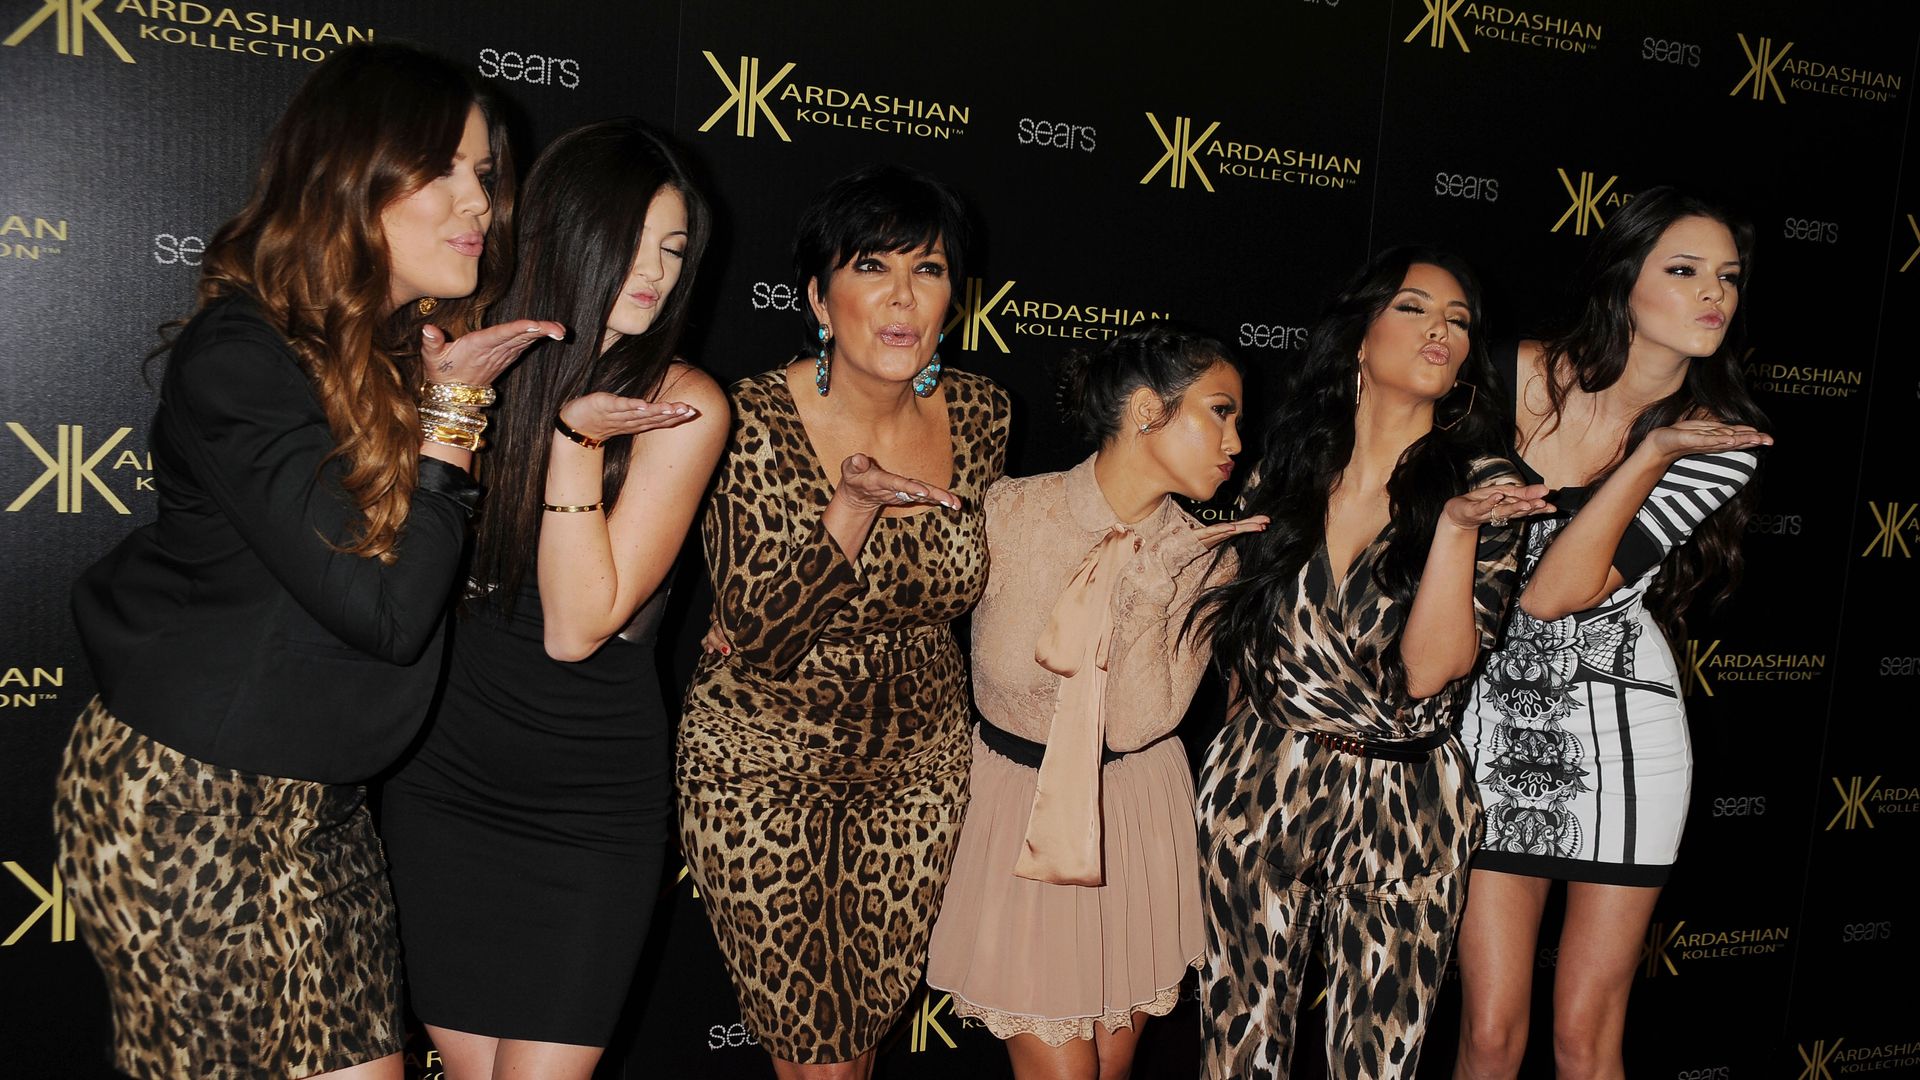 The Kardashian family tree: Explore the who's who of the Kardashian-Jenner dynasty